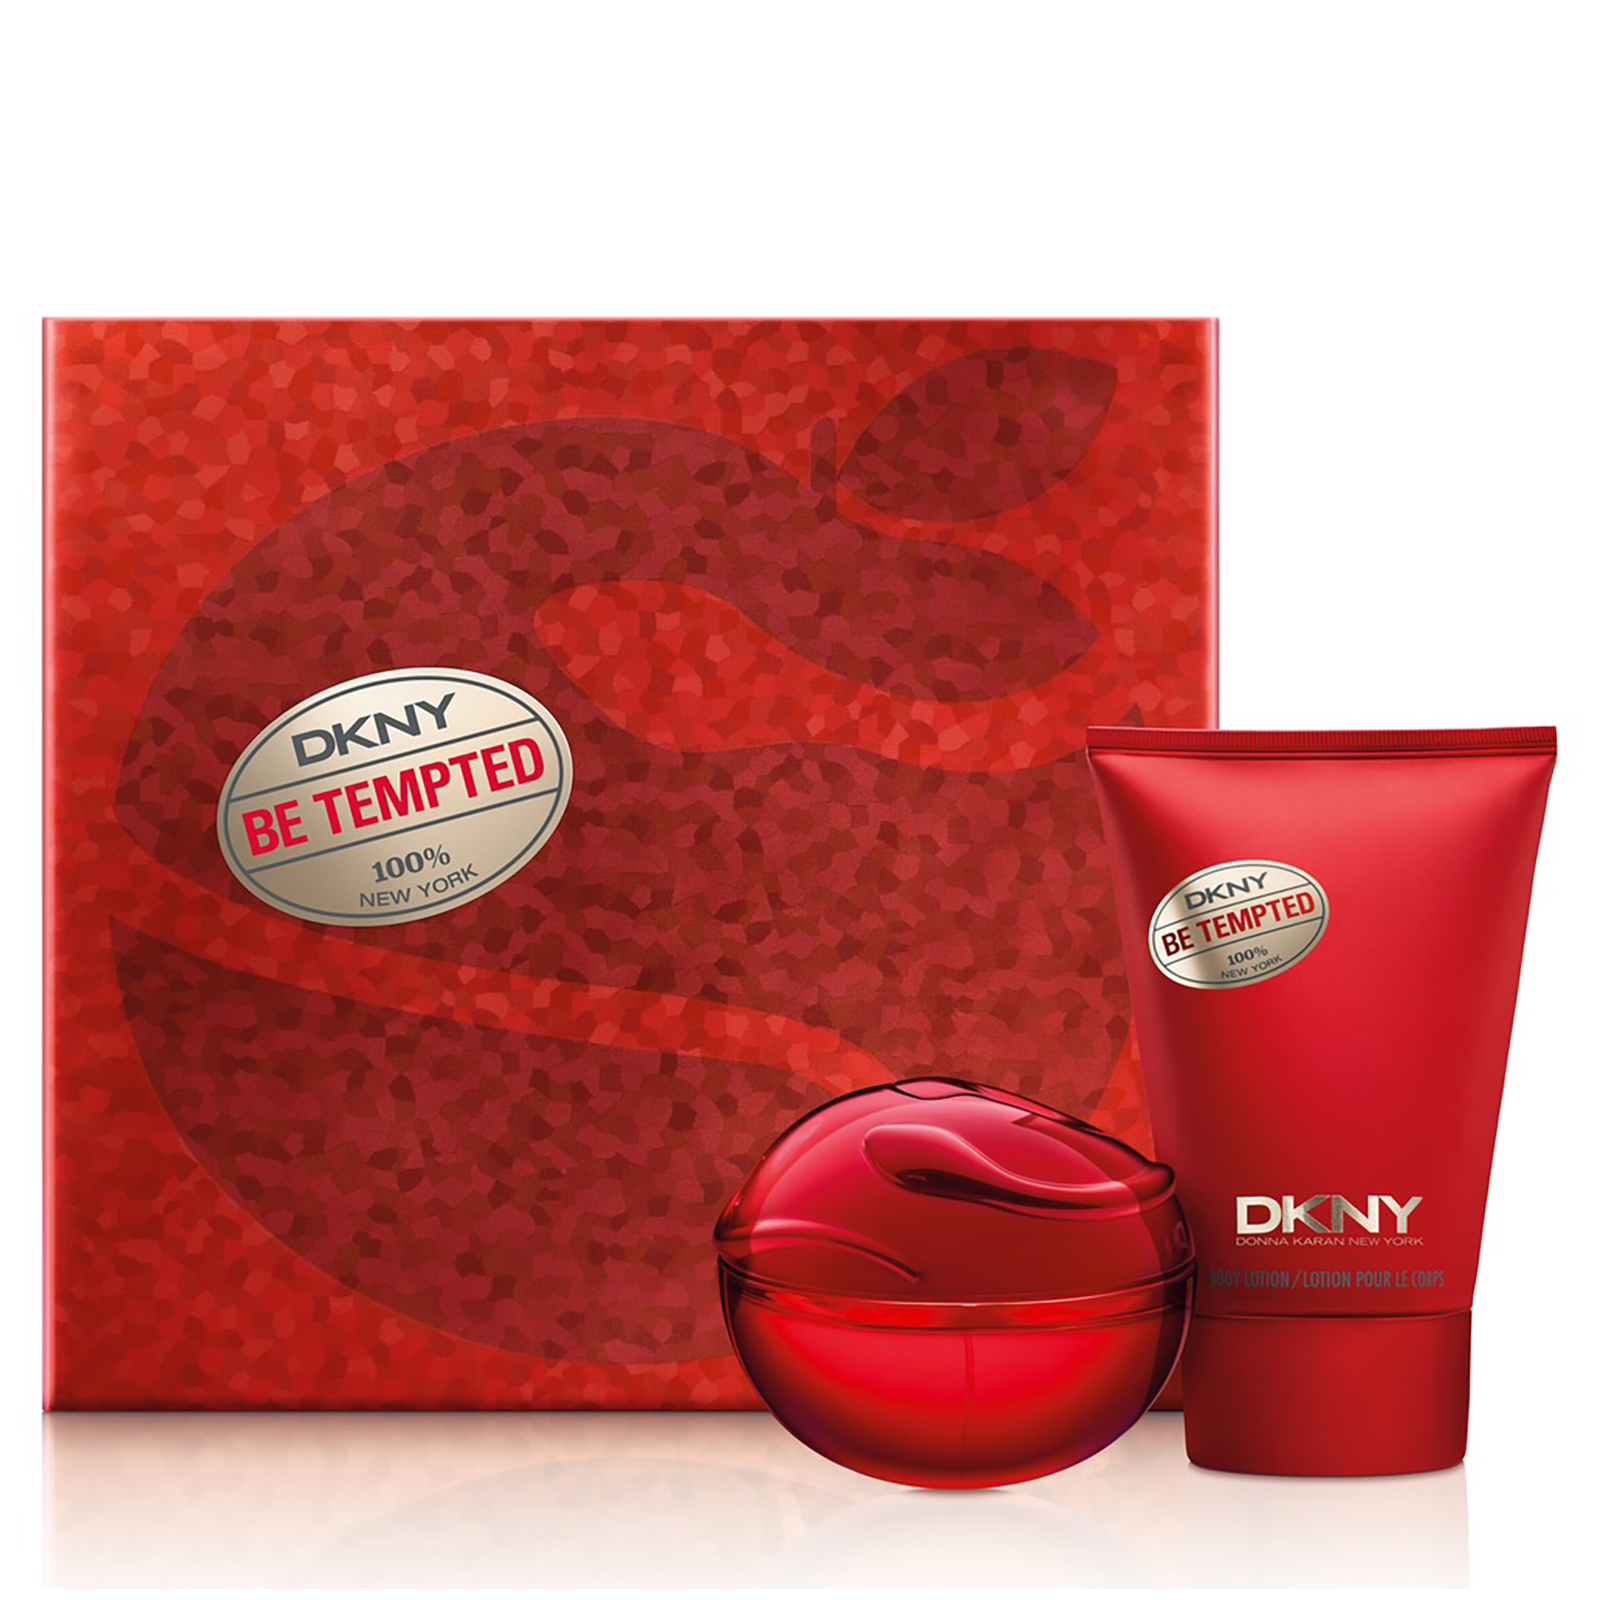 DKNY Be Tempted Eau de Parfum 50ml and Body Lotion Set